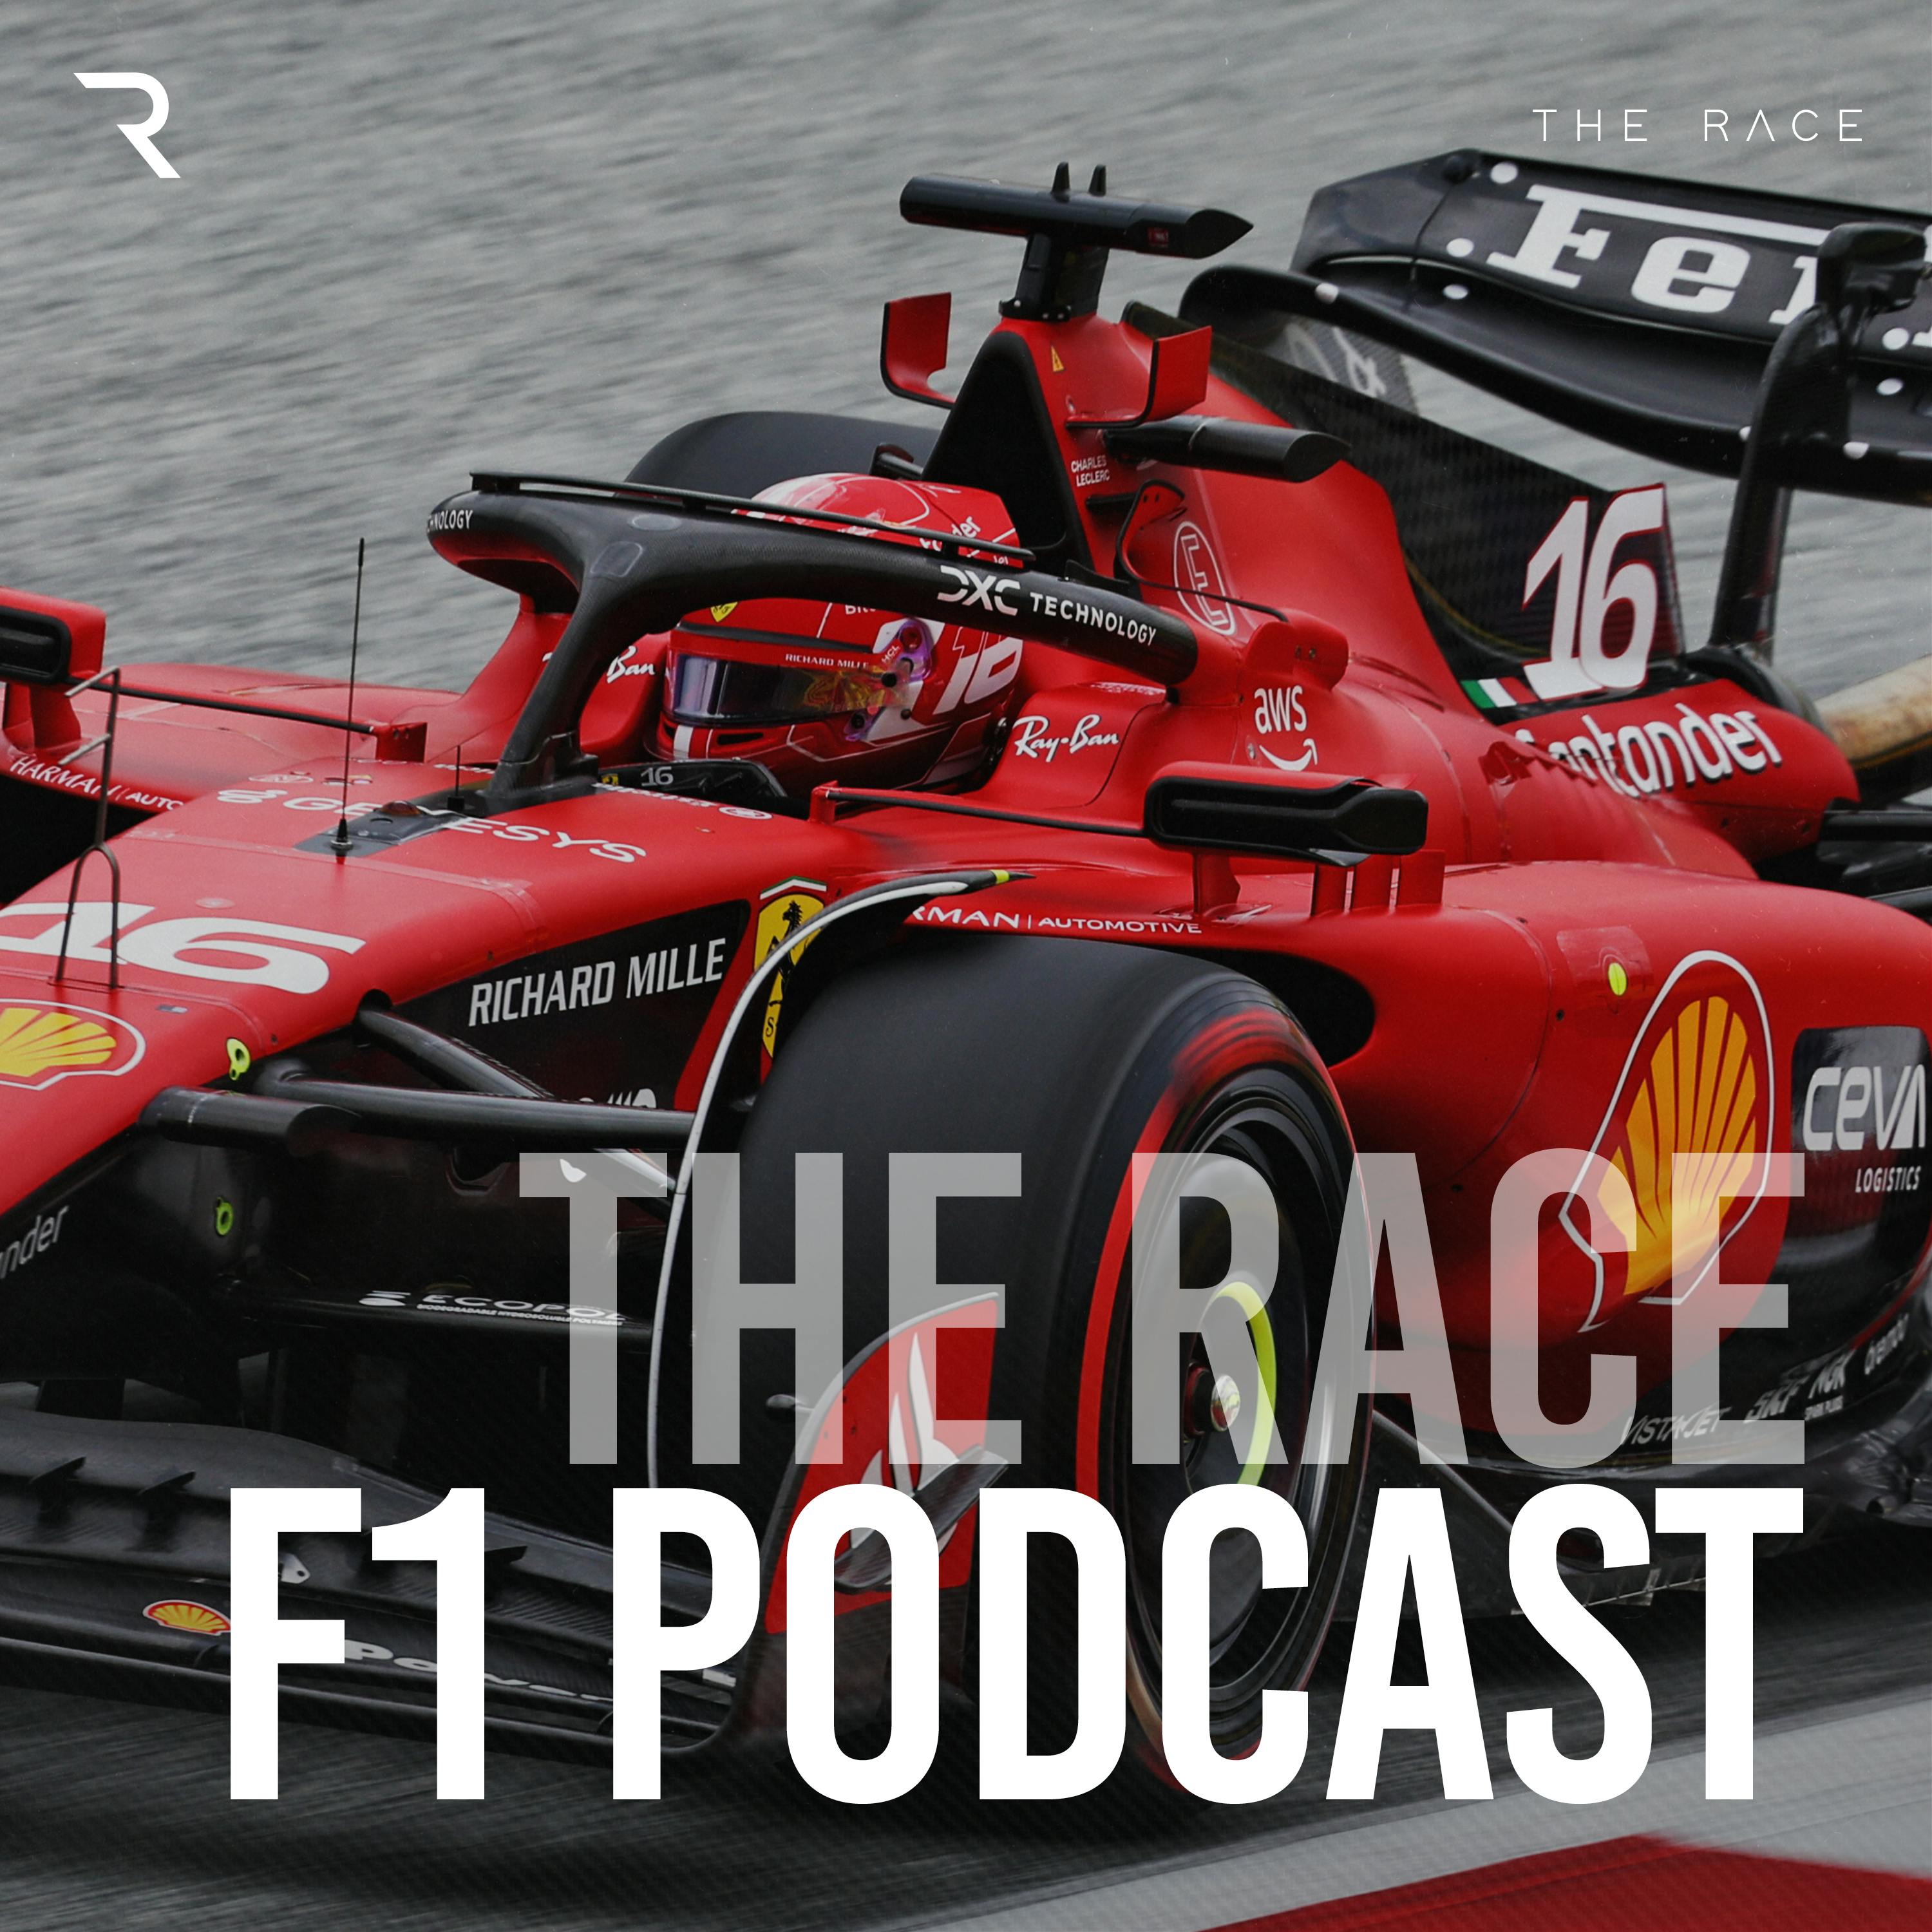 Your questions answered: Ricciardo, Ferrari's struggles and Red Bull dominance